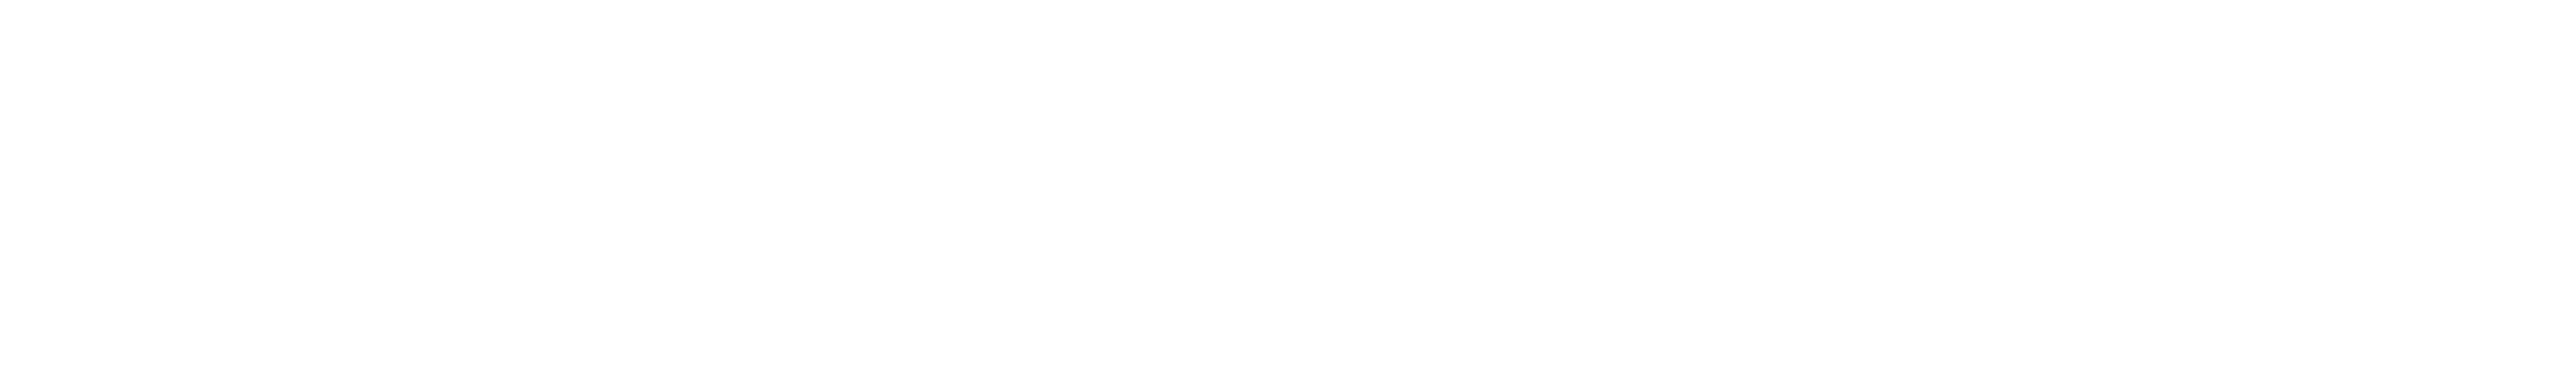 New Zealand government logo